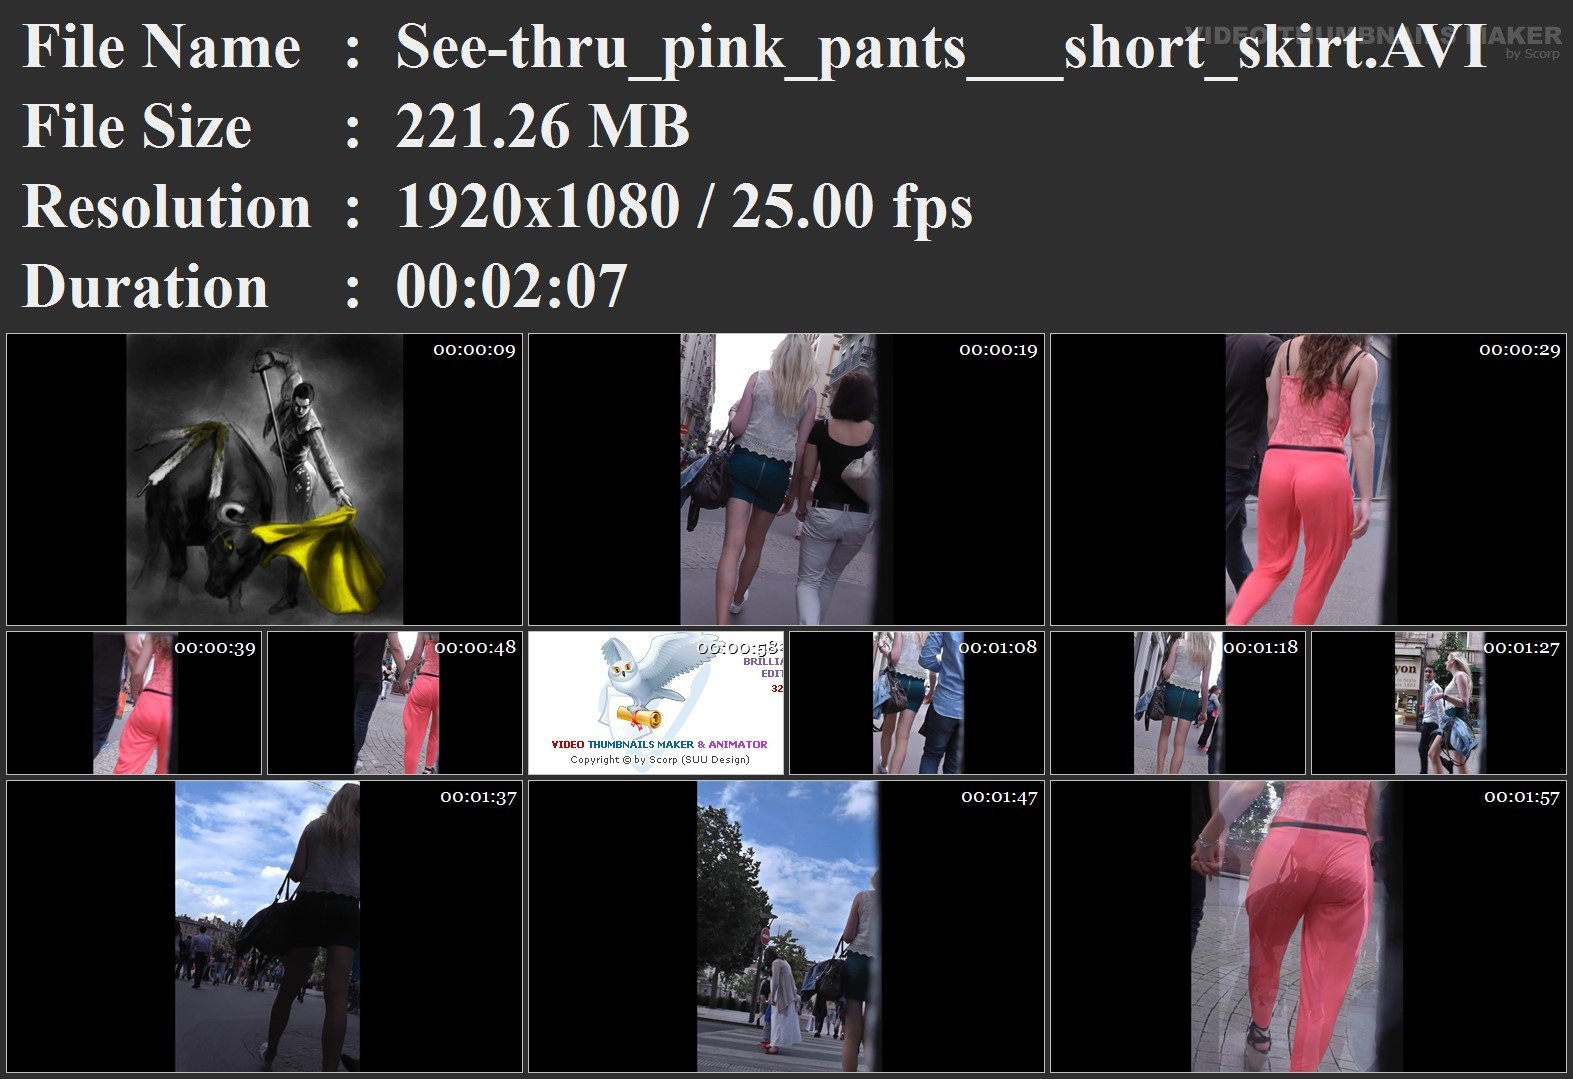 See-thru_pink_pants___short_skirt.AVI.jpg